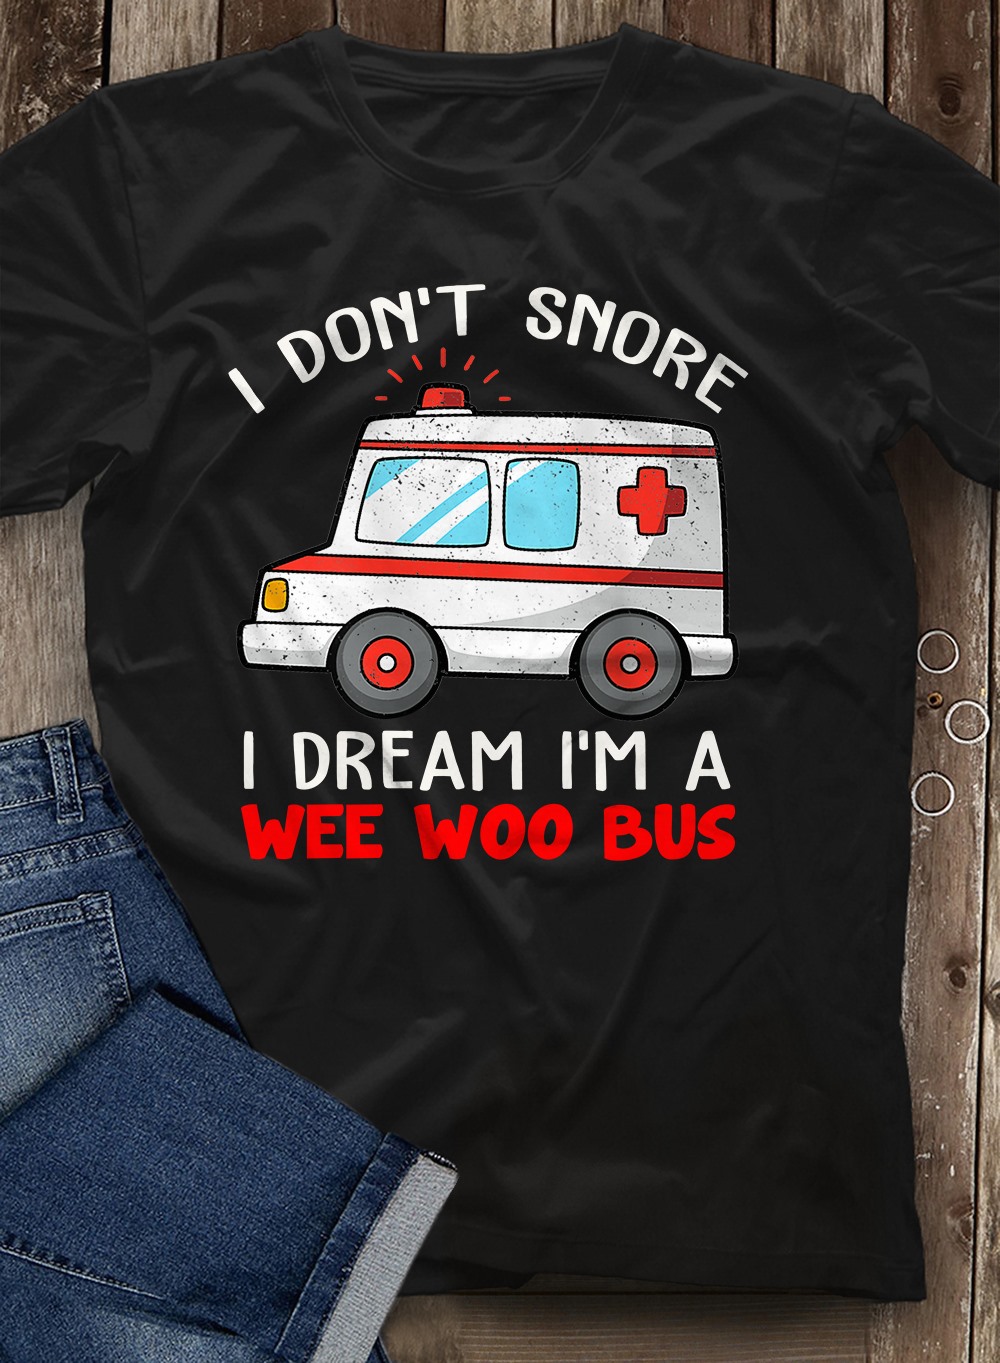 I don't snore I dream I'm a wee woo bus - Ambulance bus